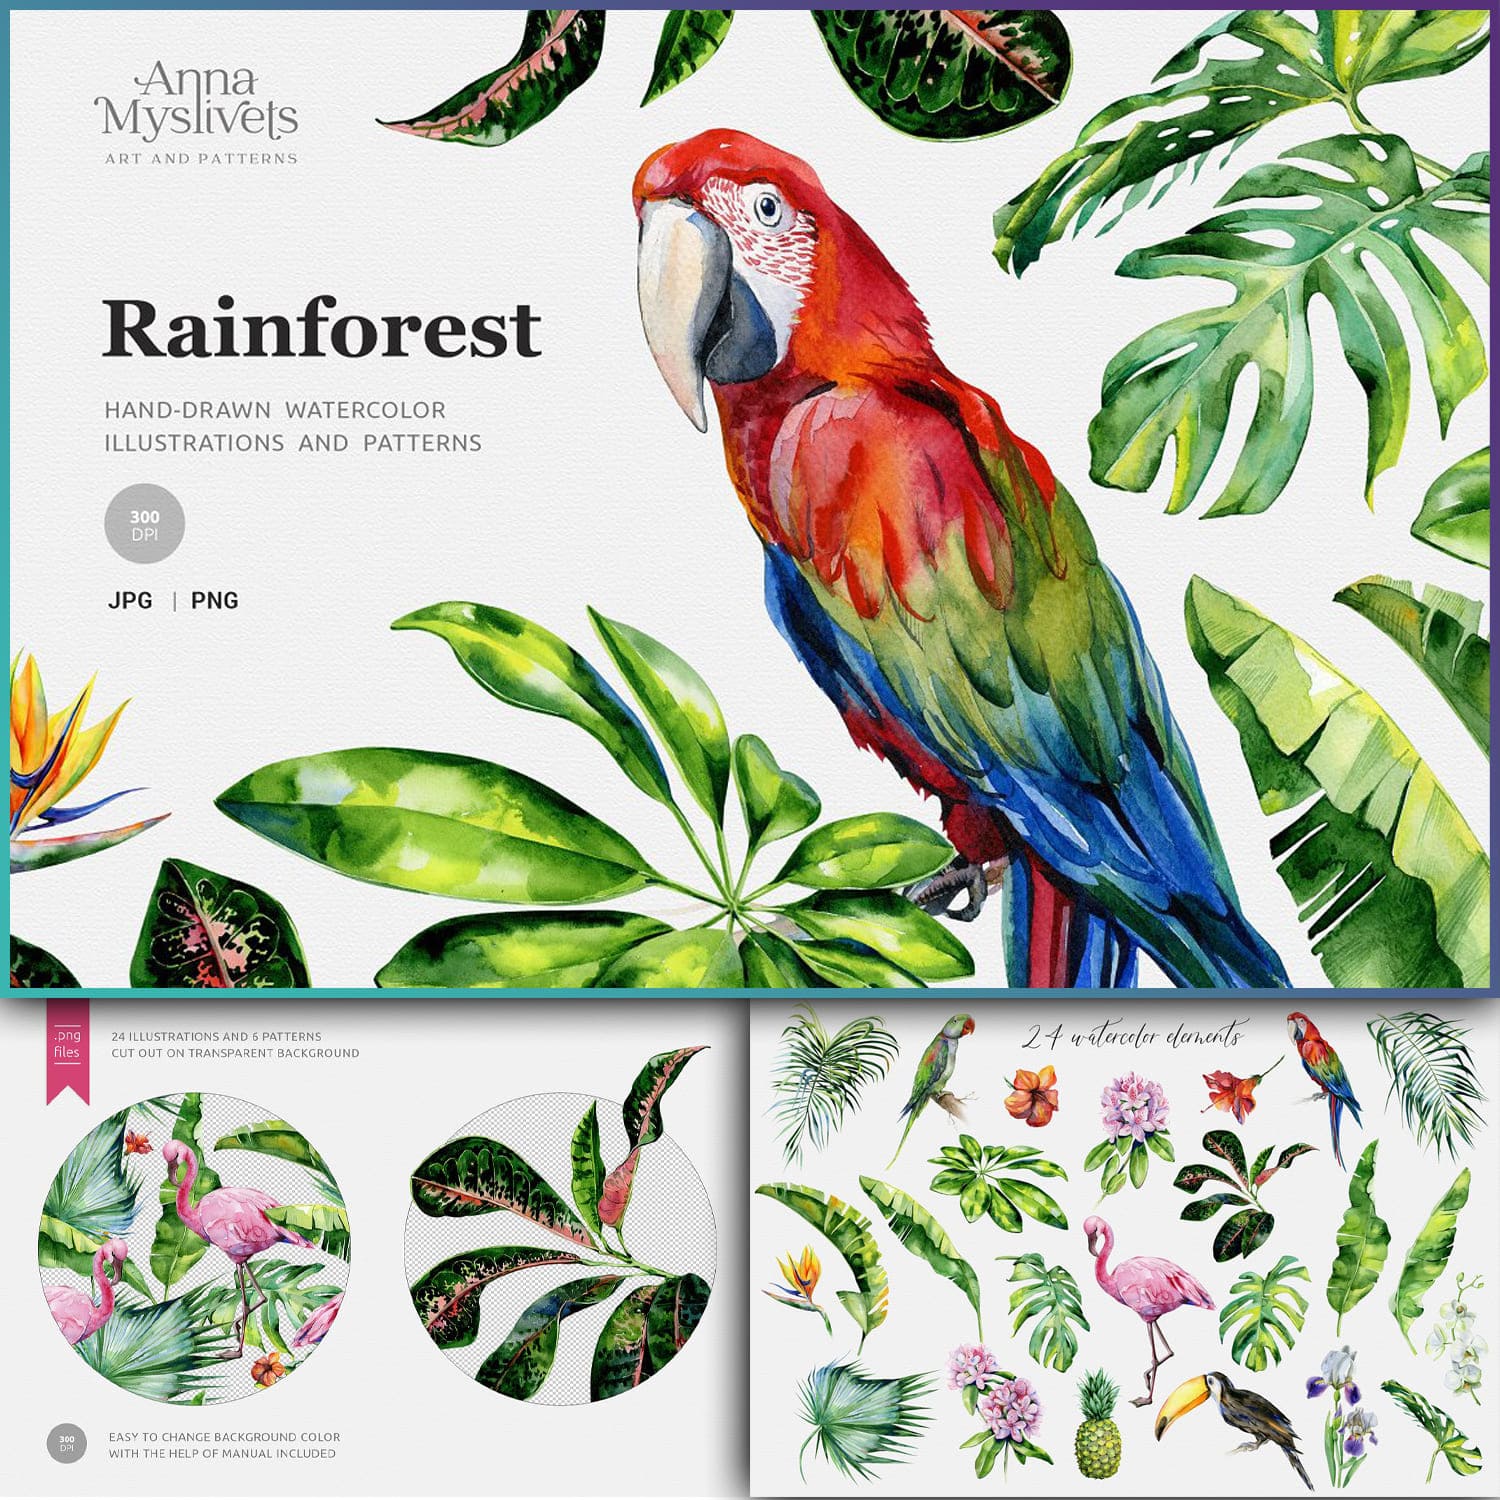 Rainforest illustrations, main picture 1500x1500.